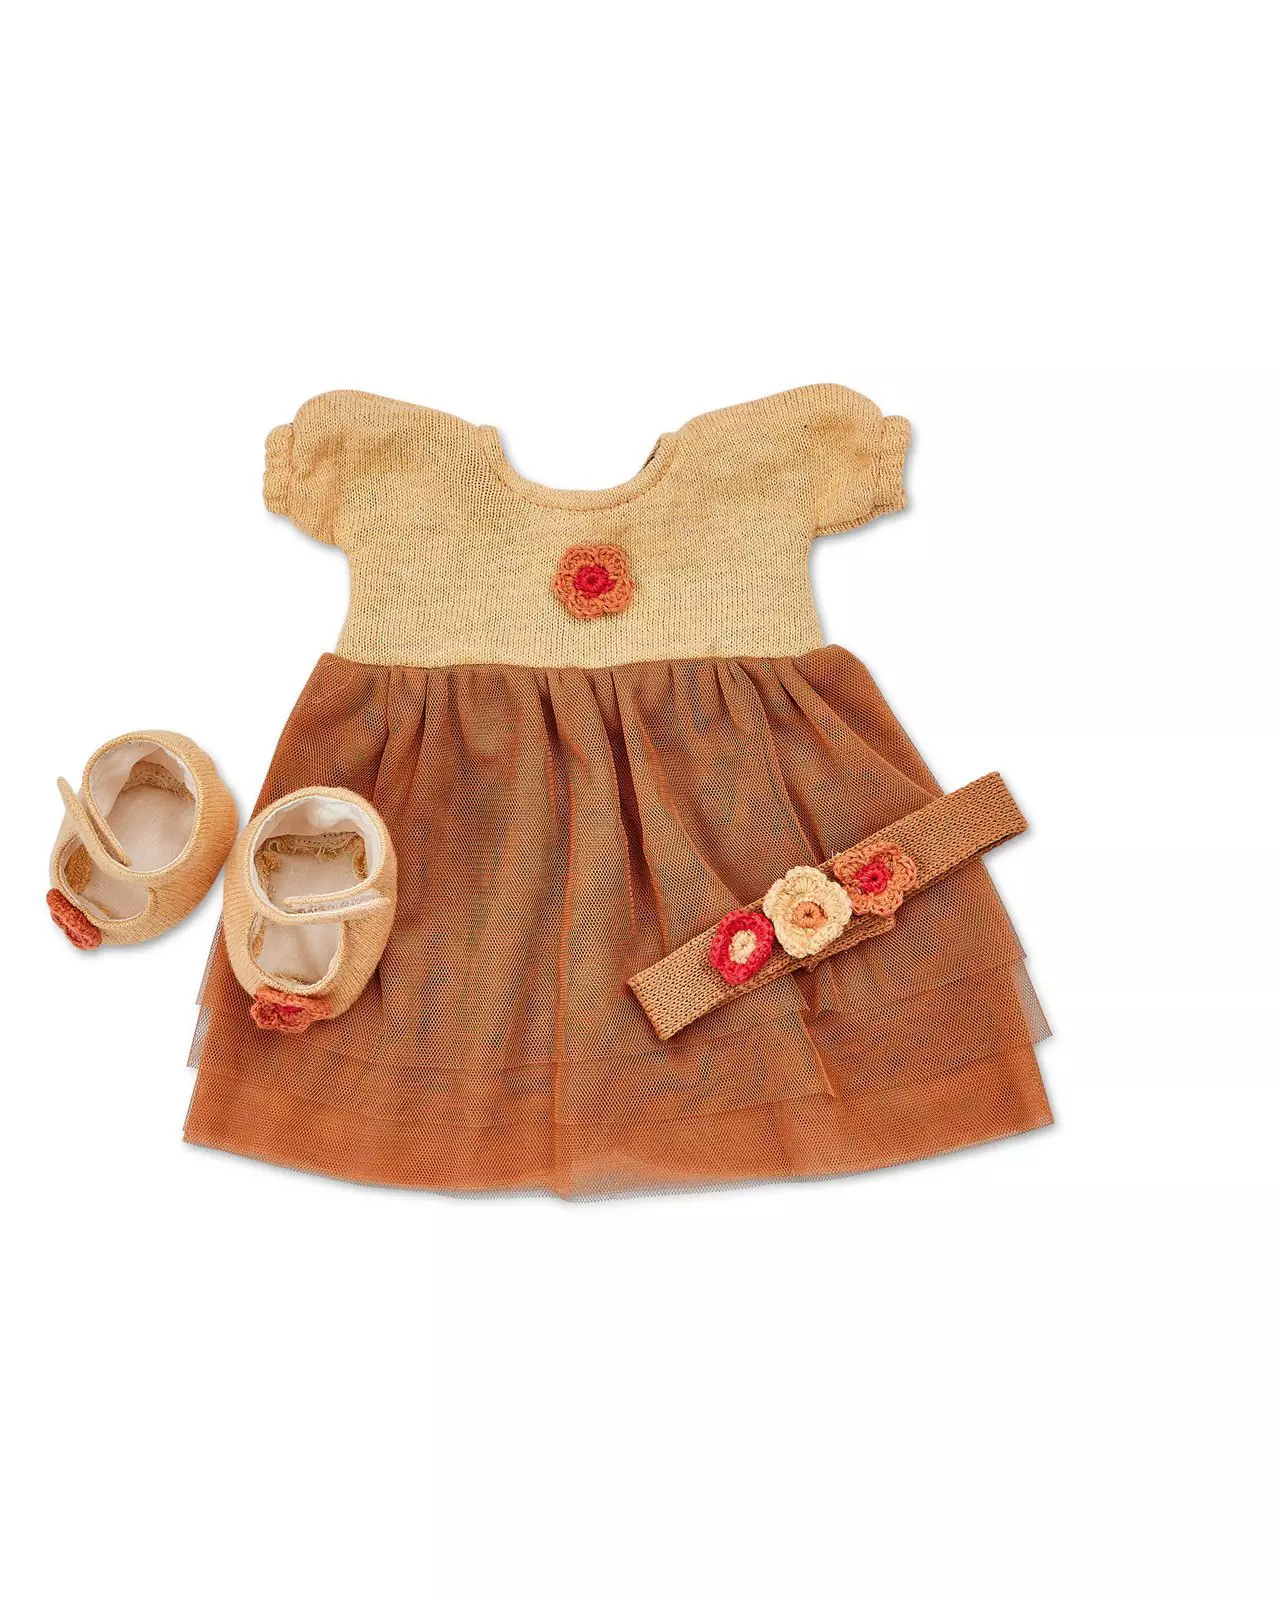 Smallstuff Doll Clothing, Party Dress W.